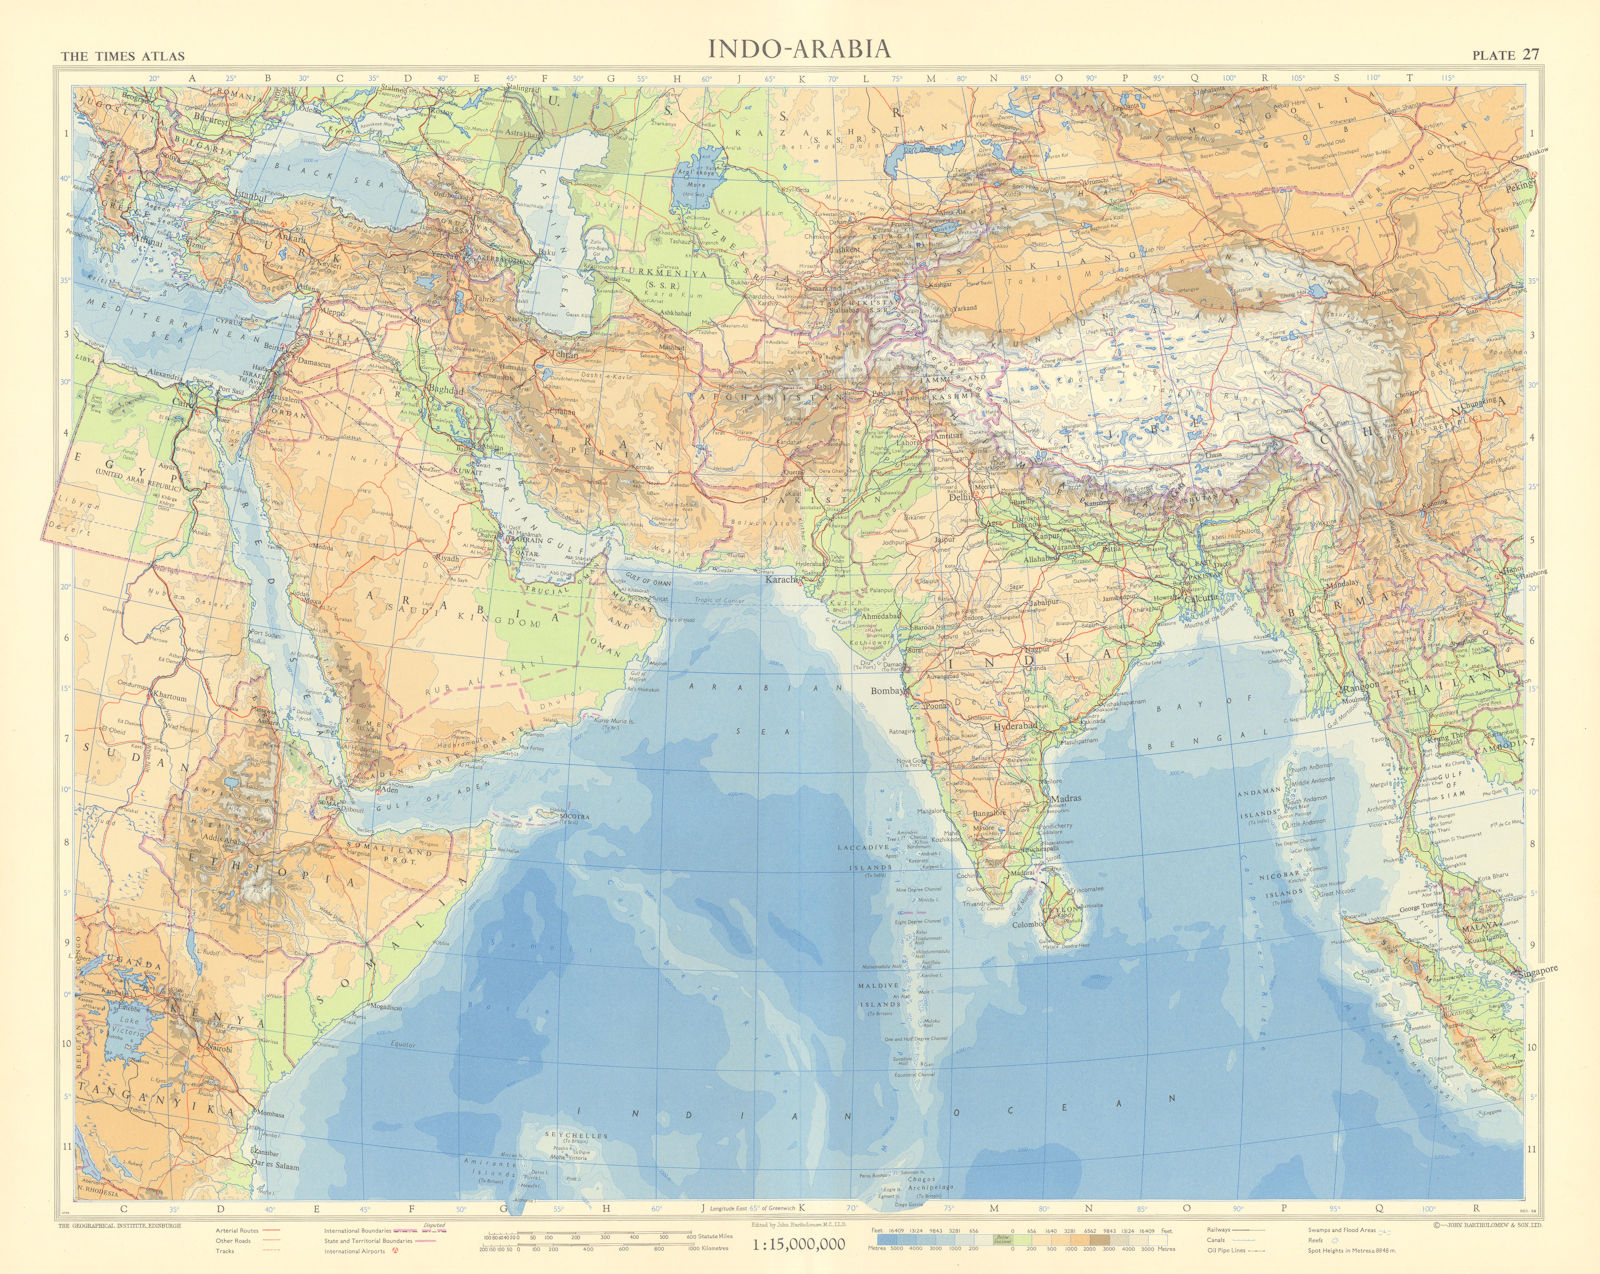 South Asia. Middle East Africa Indian Ocean. "Dubayy" Dubai. TIMES 1959 map